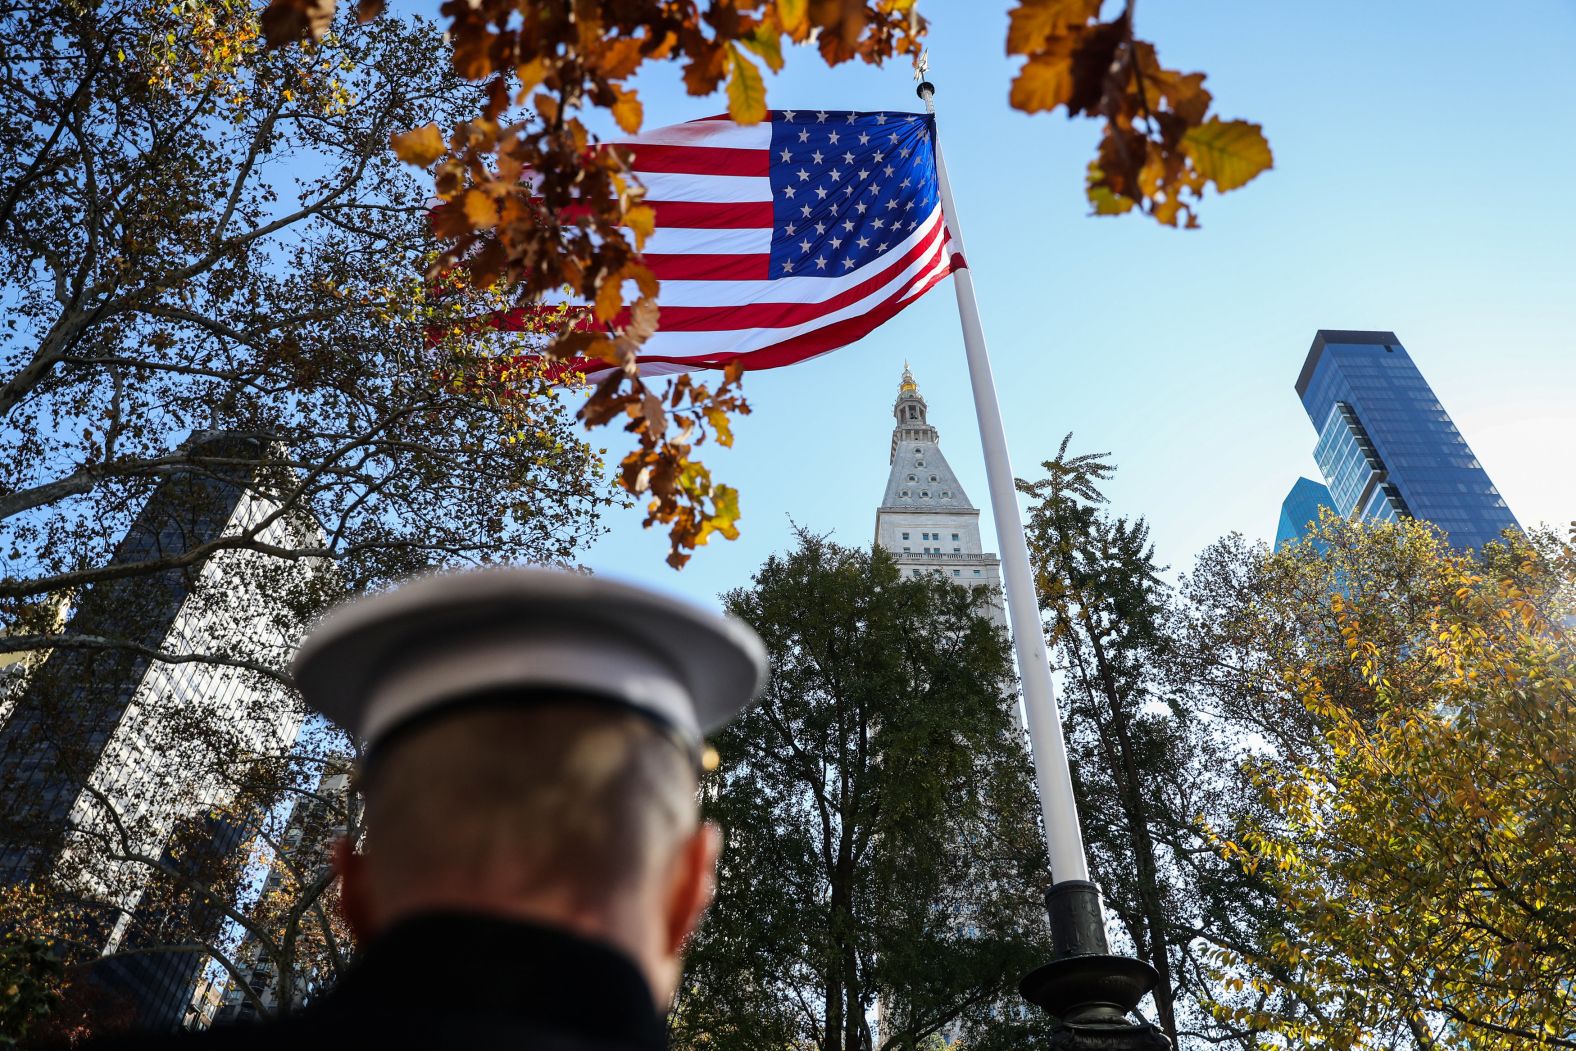 New York City celebrates on Sunday with its Veterans Day Parade.